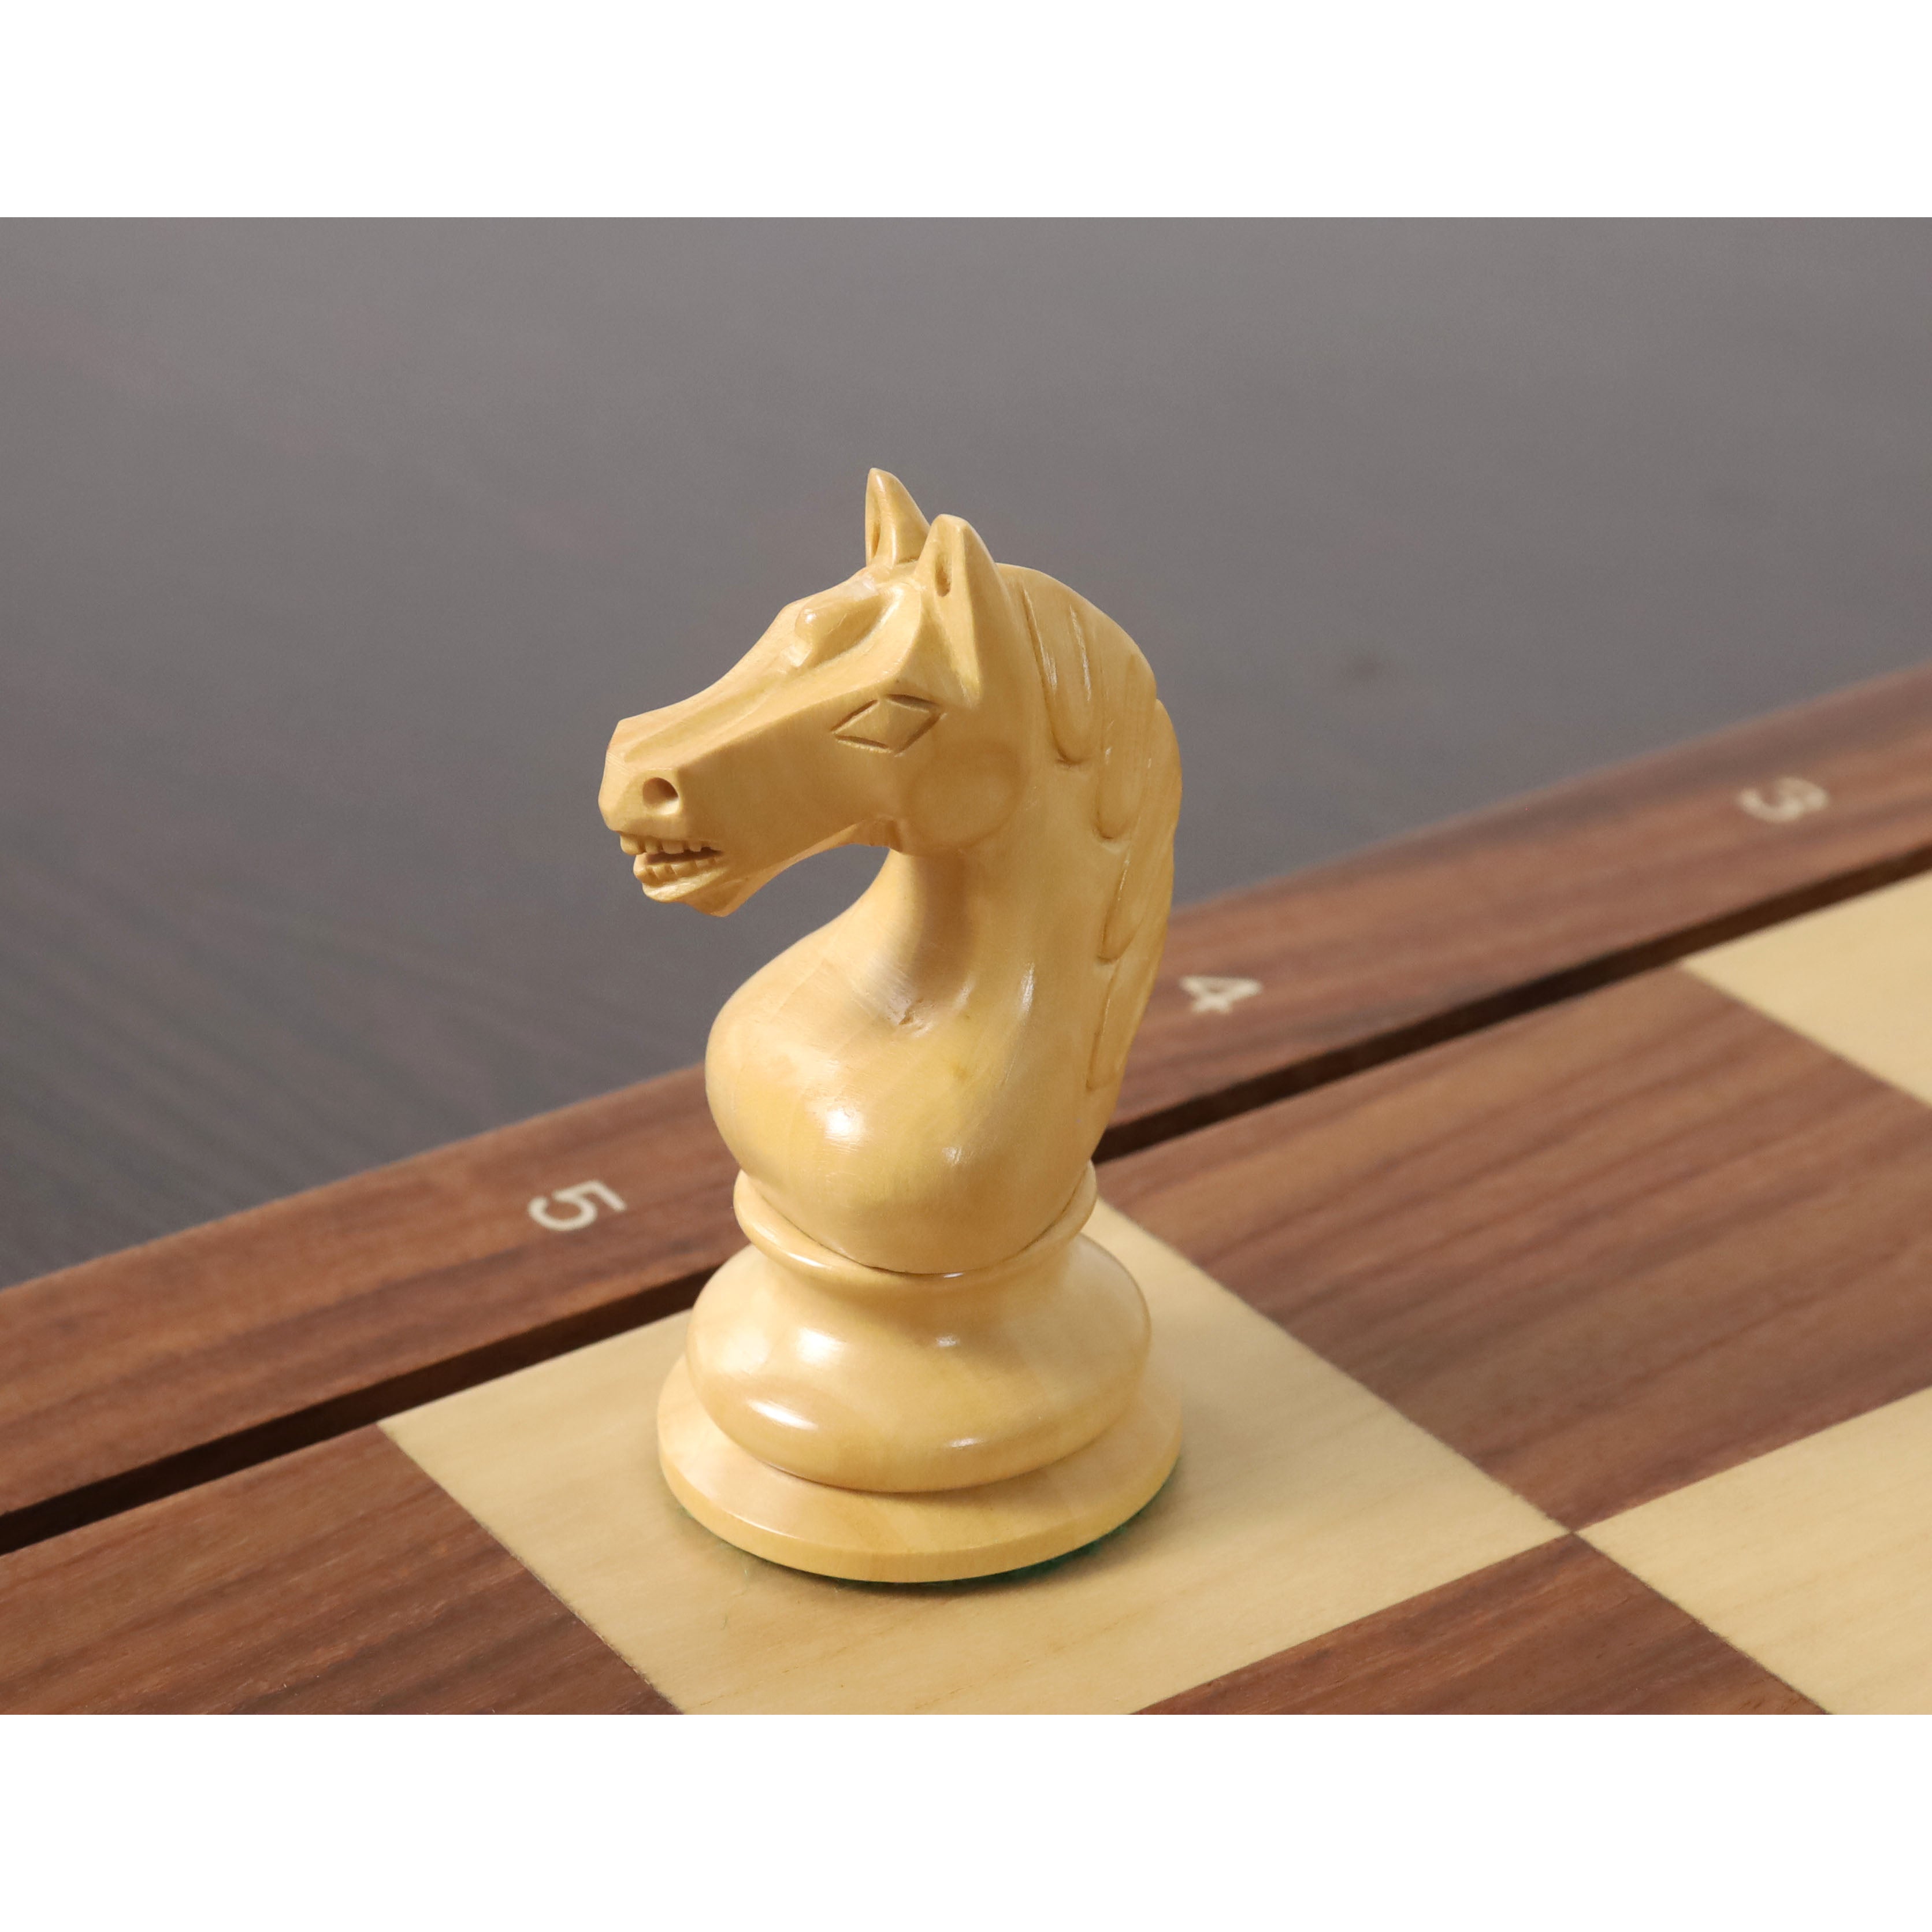 1933 Botvinnik Flohr-I Soviet Chess Pieces Only Set - Golden Rosewood - 3.6" King